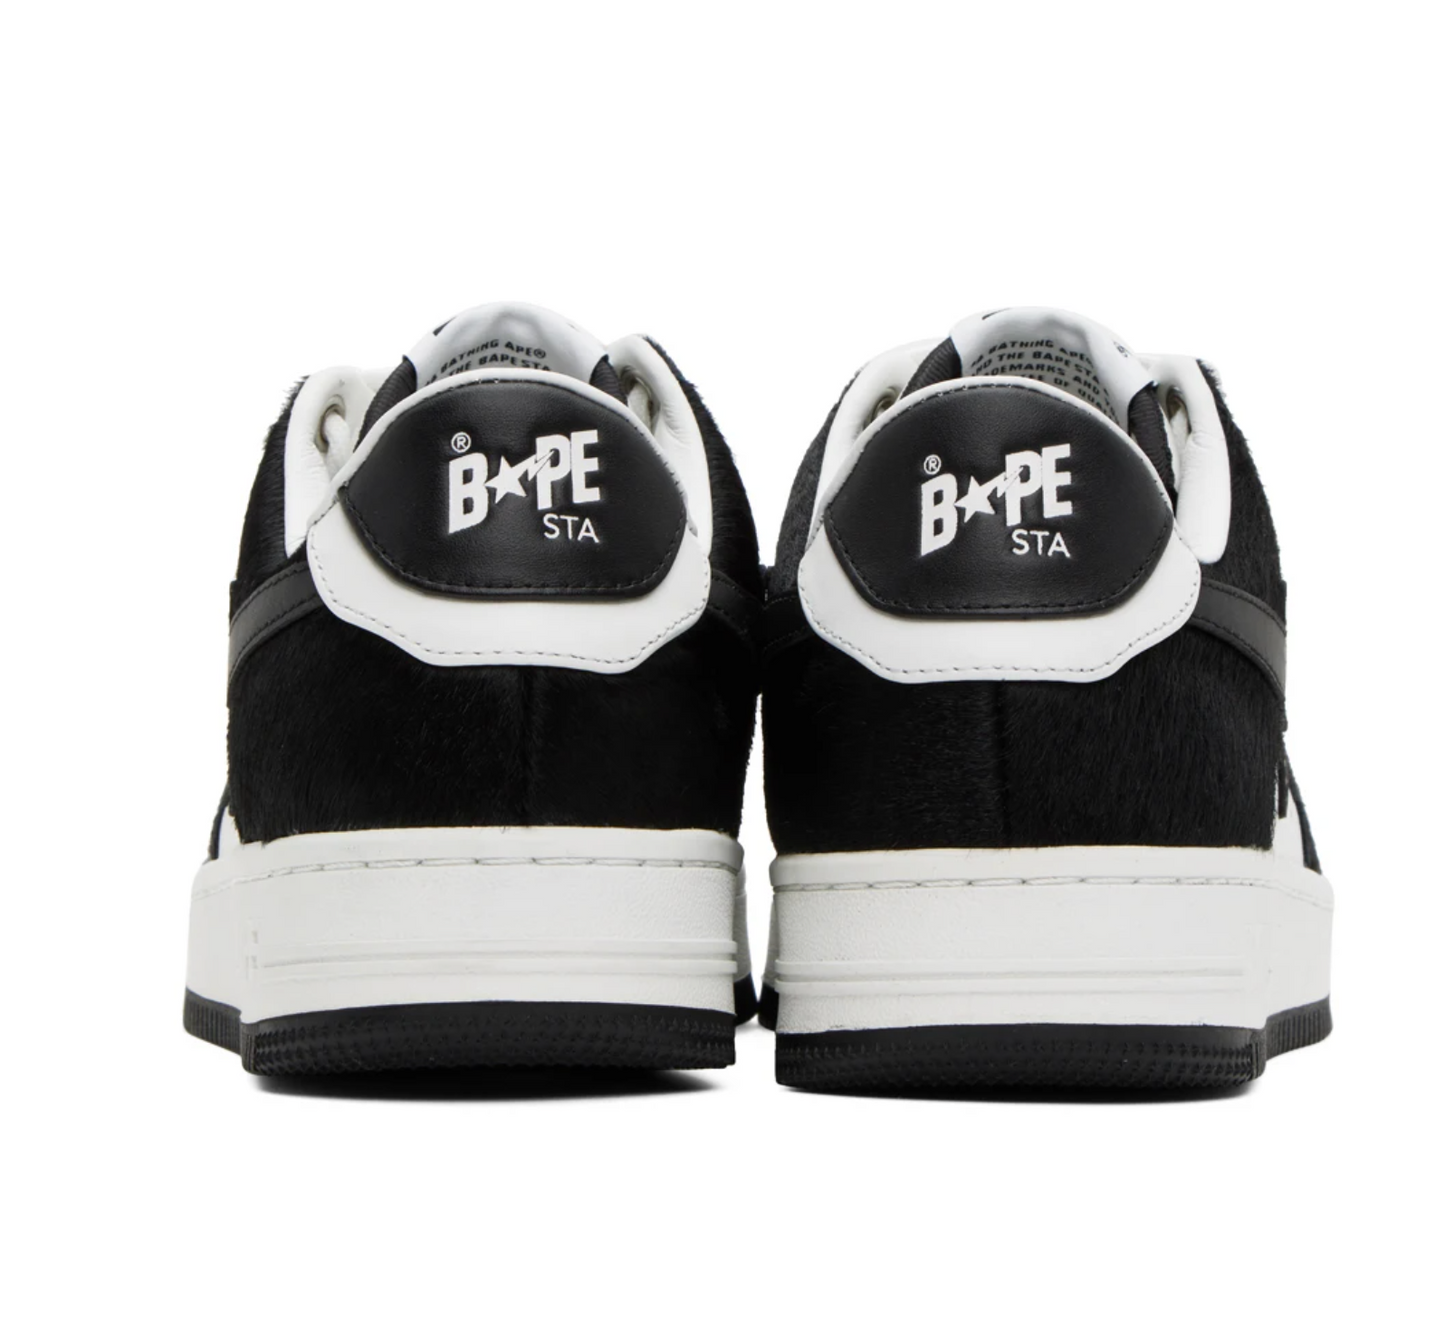 BAPE Black & White STA #1 Sneakers